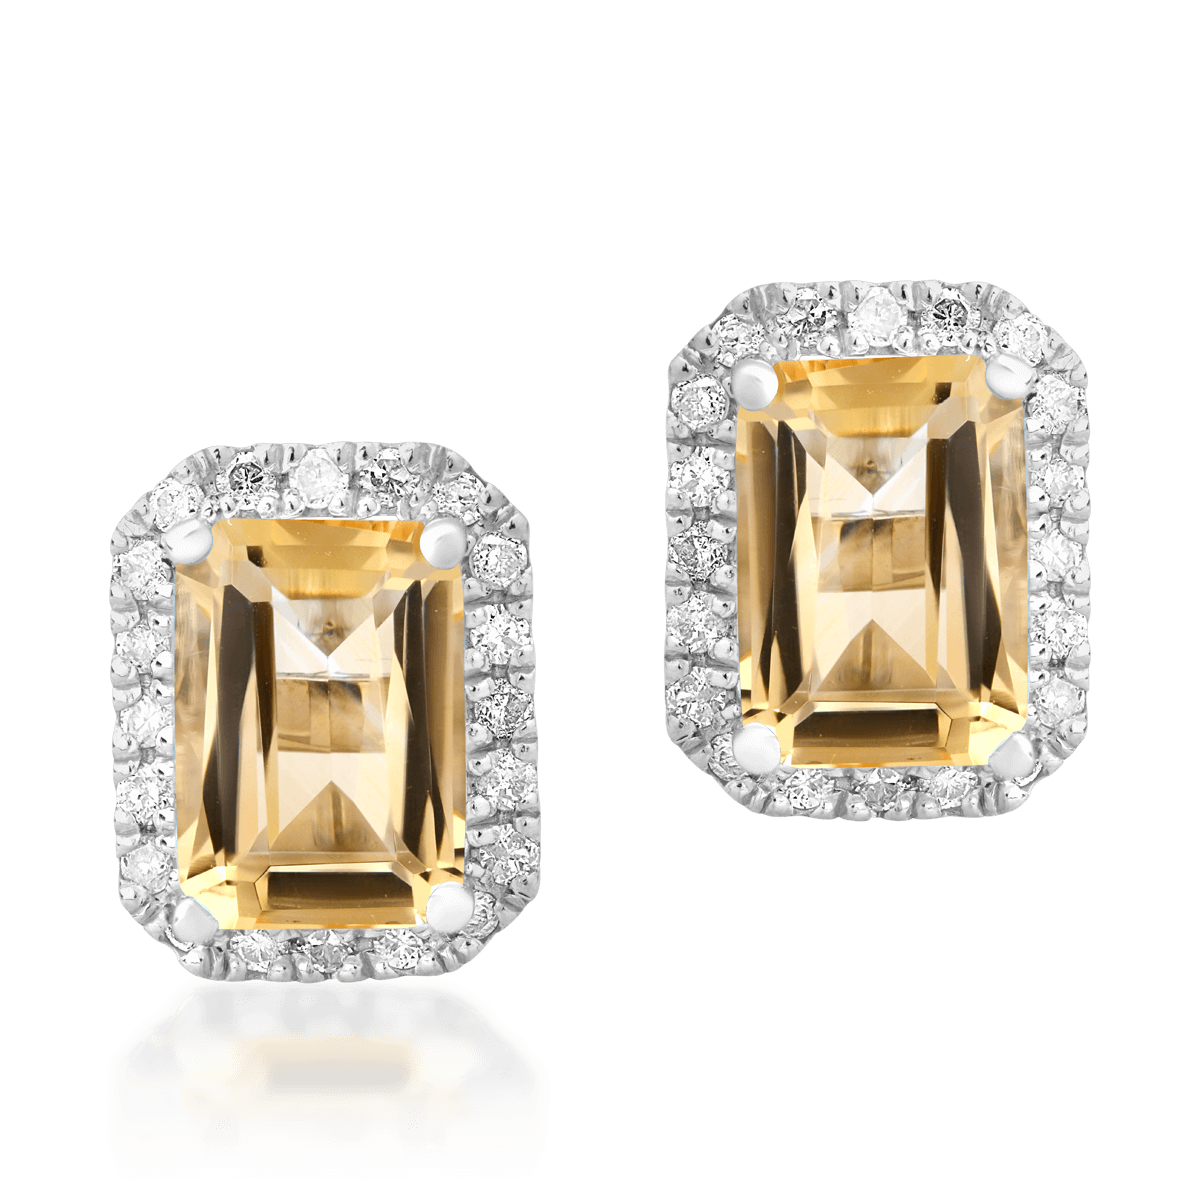 Cercei din aur alb de 18K cu citrine de 1.73ct si diamante de 0.24ct 0.24ct